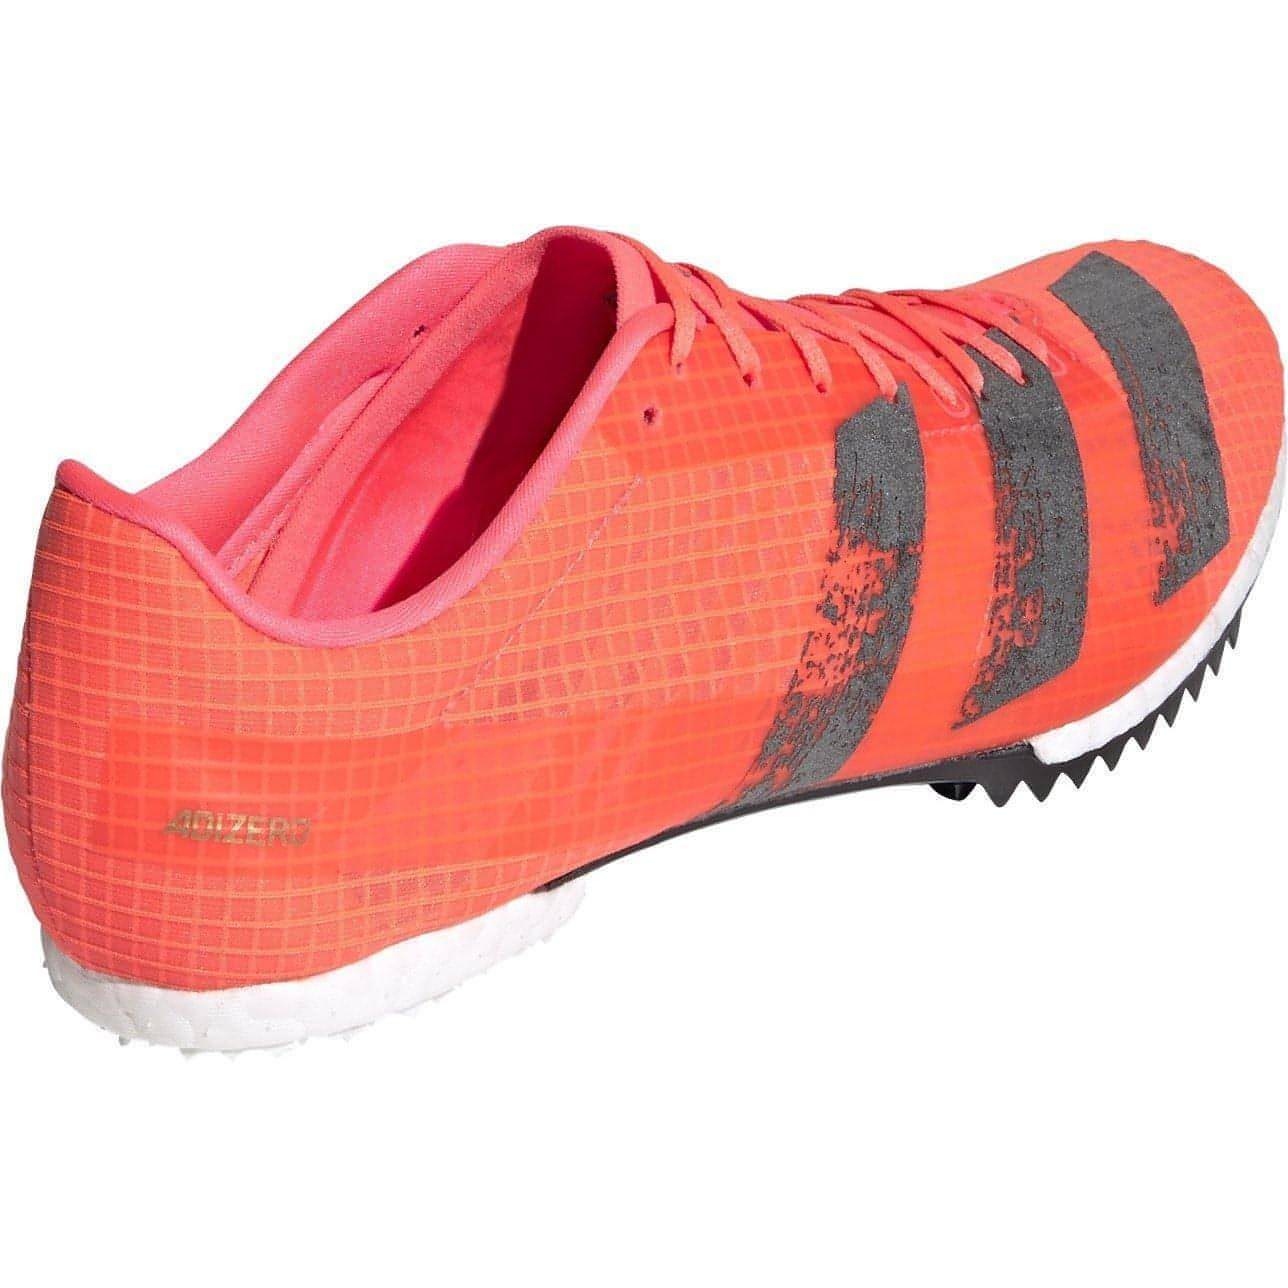 adidas Adizero MD Running Spikes - Pink - Start Fitness